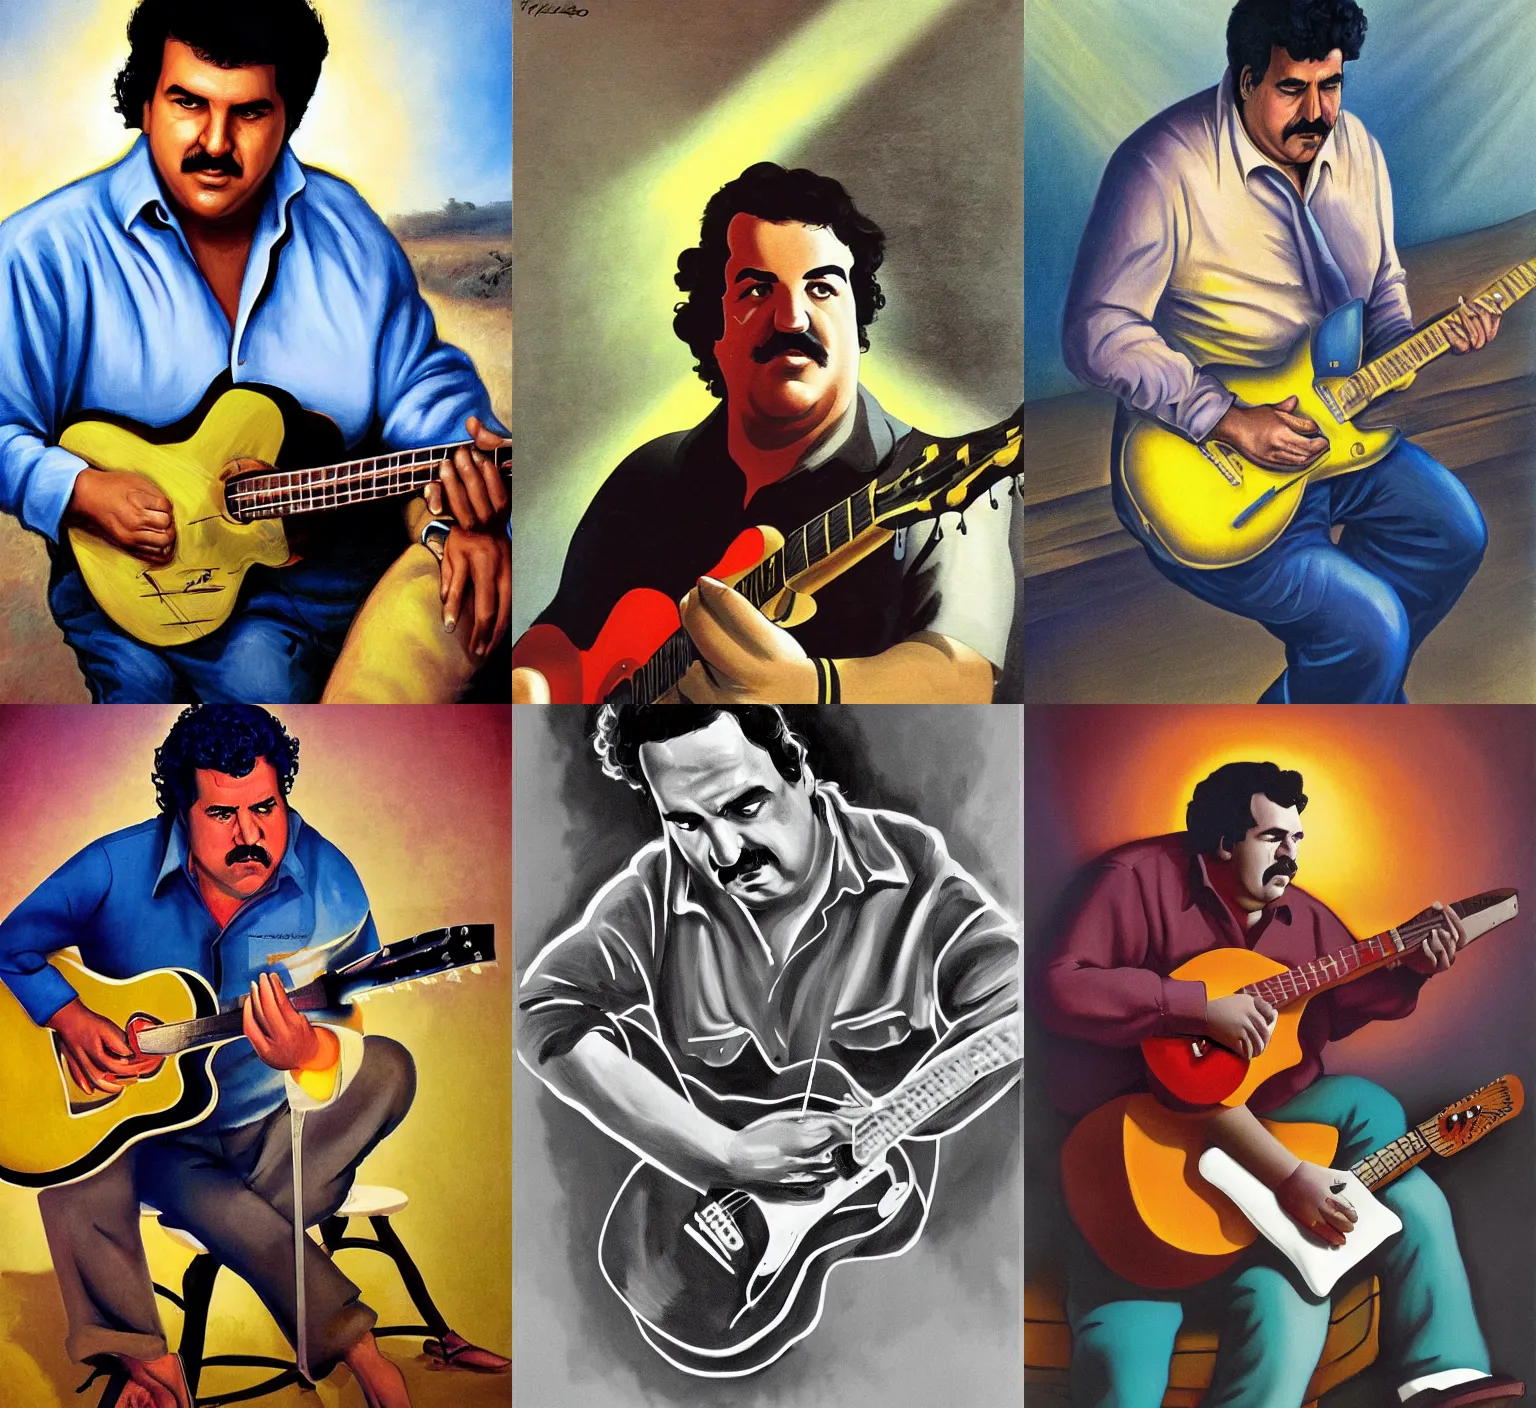 Prompt: Portrait of Pablo Escobar playing guitar, by John Philip Falter and John Kricfalusi - Volumetric light